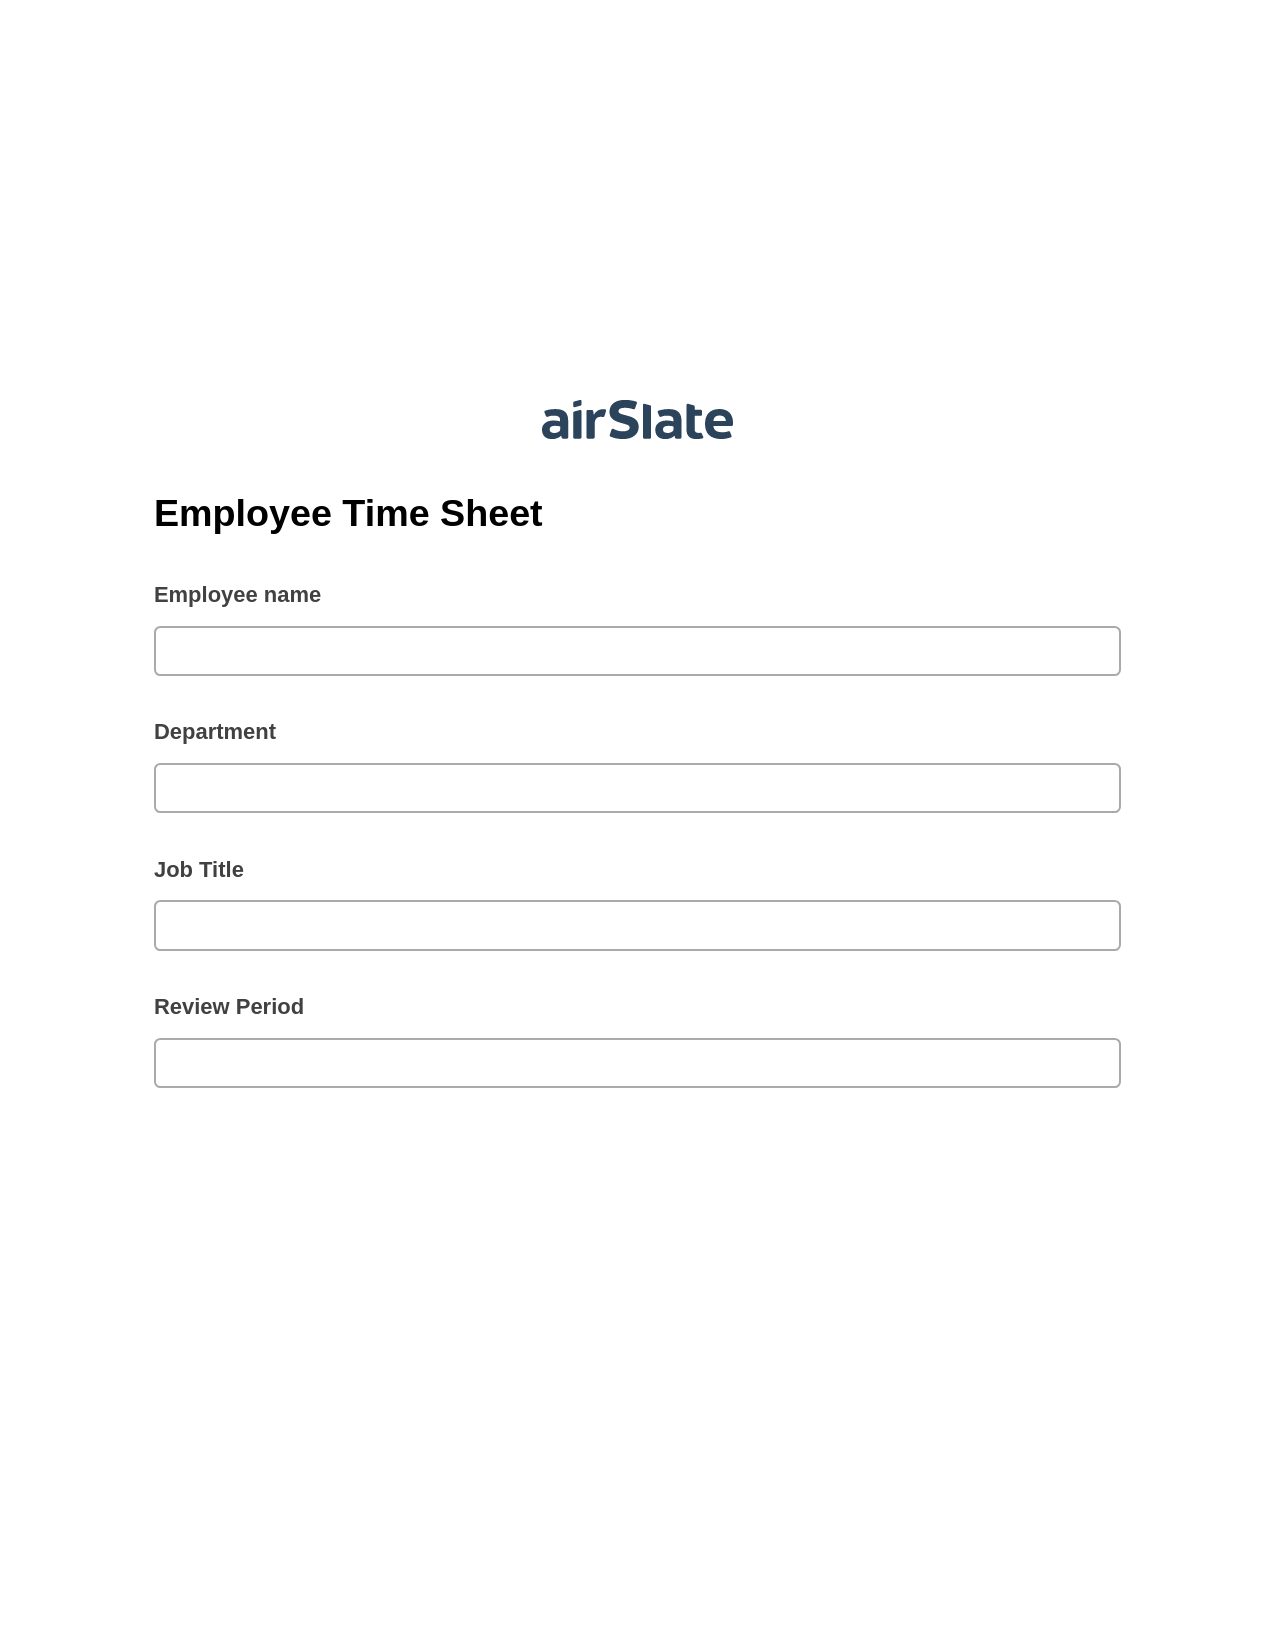 Employee Time Sheet Pre-fill Dropdowns from Office 365 Excel Bot, Revoke Access Bot, Webhook Postfinish Bot